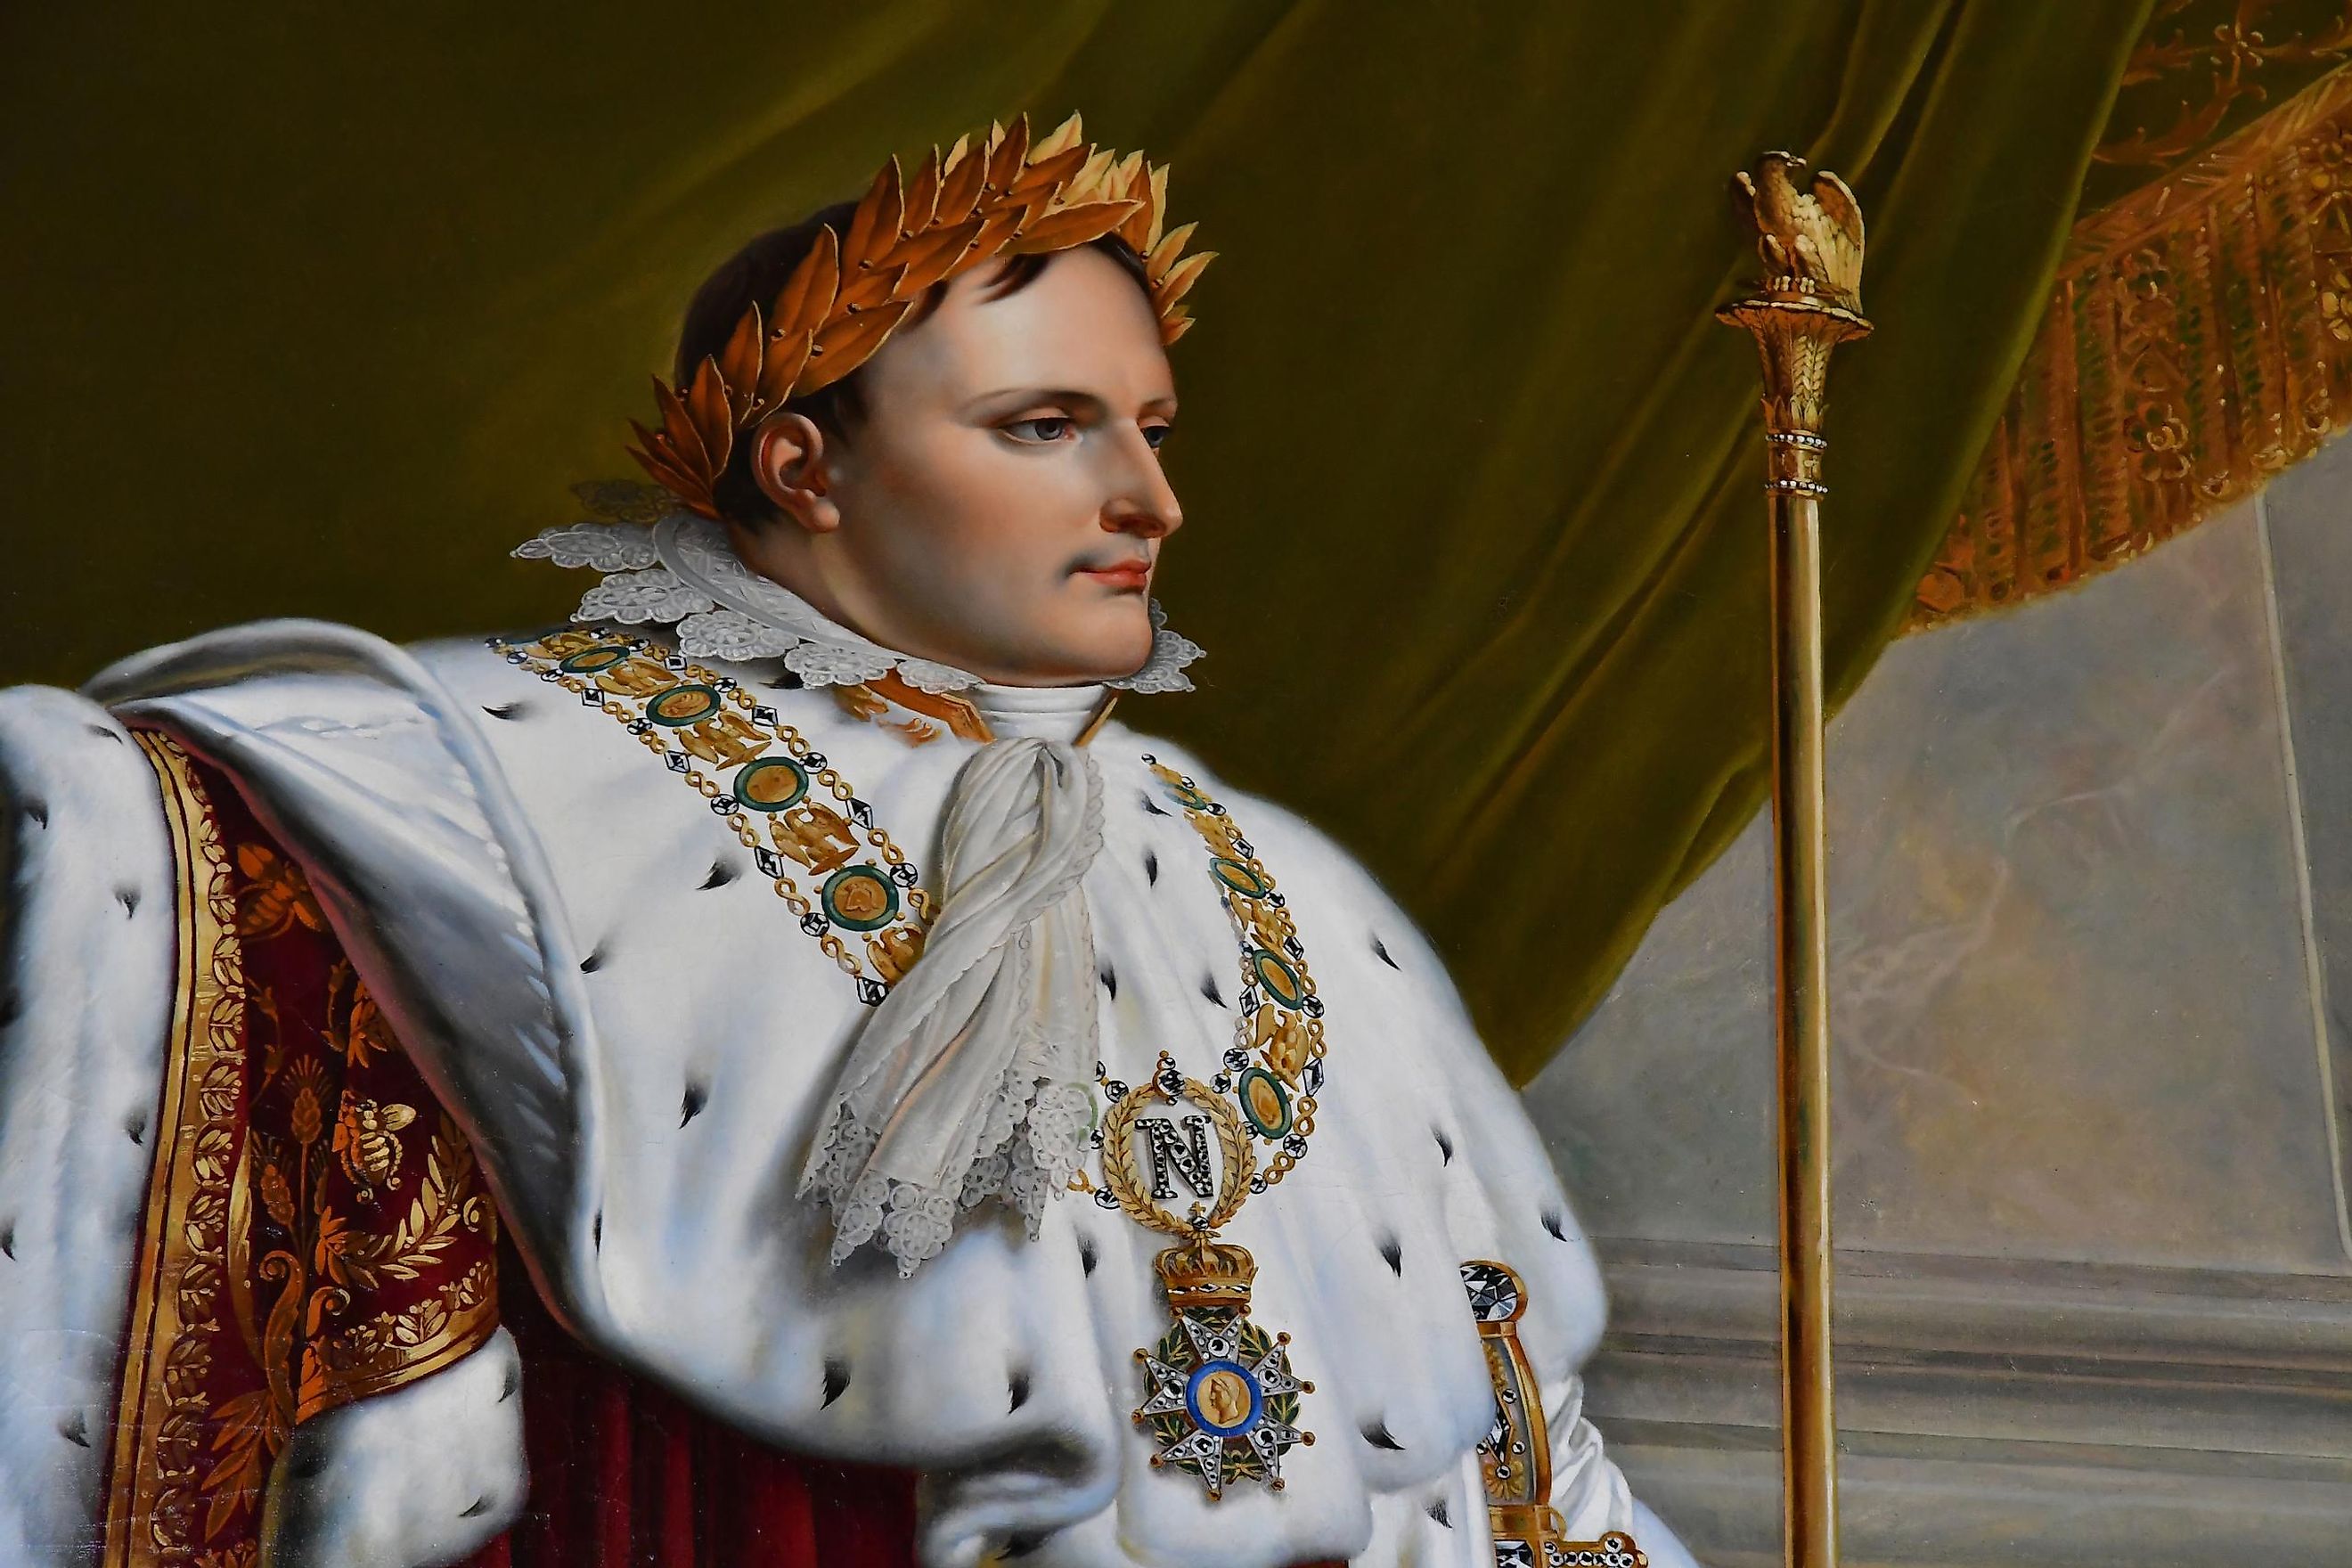 The Rise to Power and History of Napoleon Bonaparte - WorldAtlas